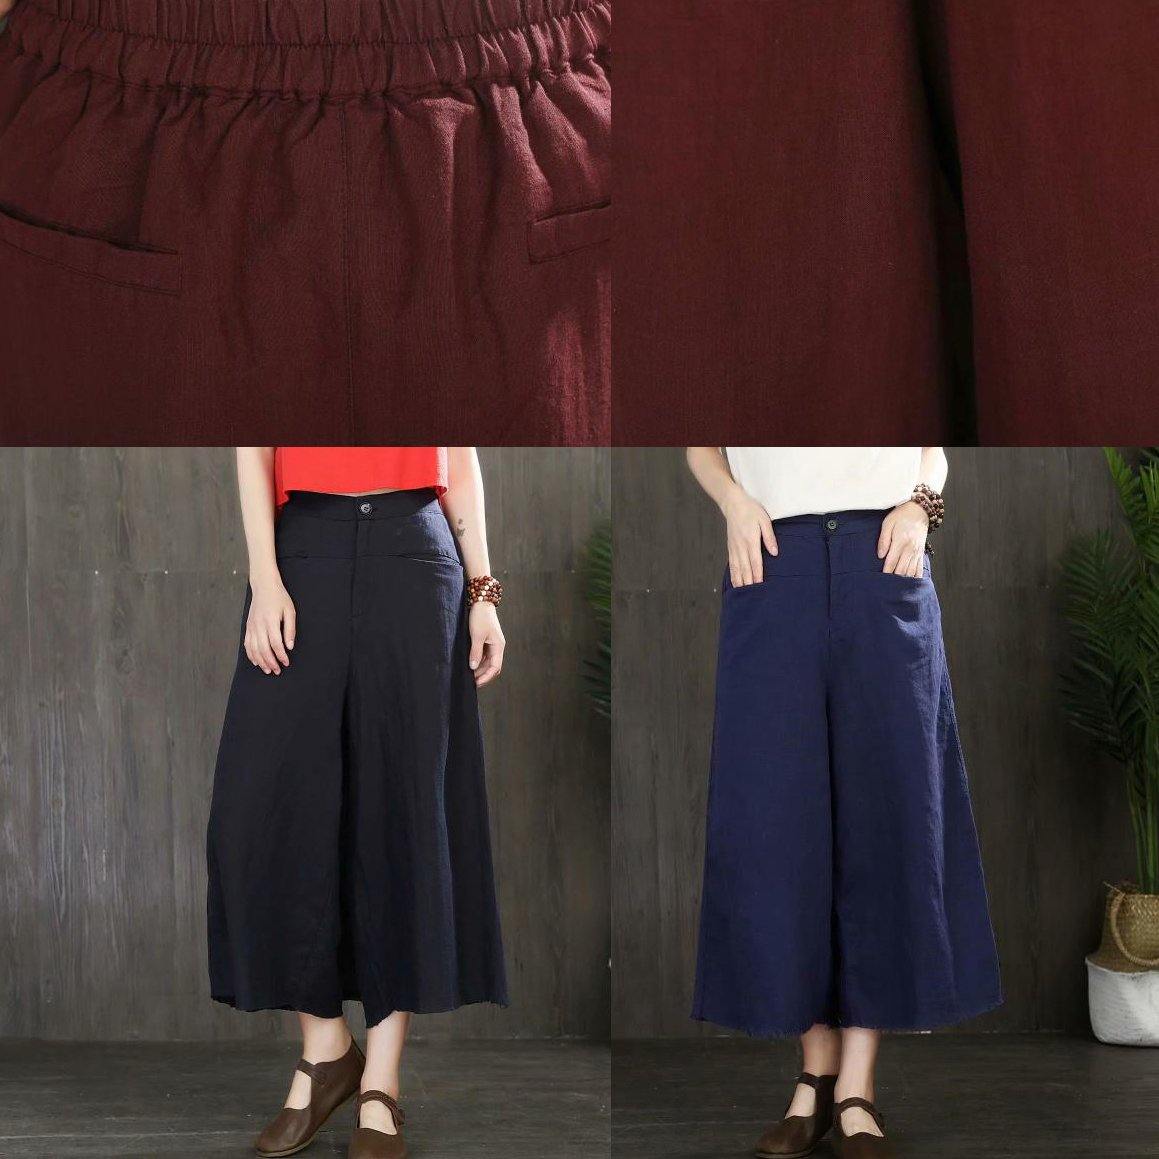 burgundy women linen crop pants loose slim casual pants - Omychic